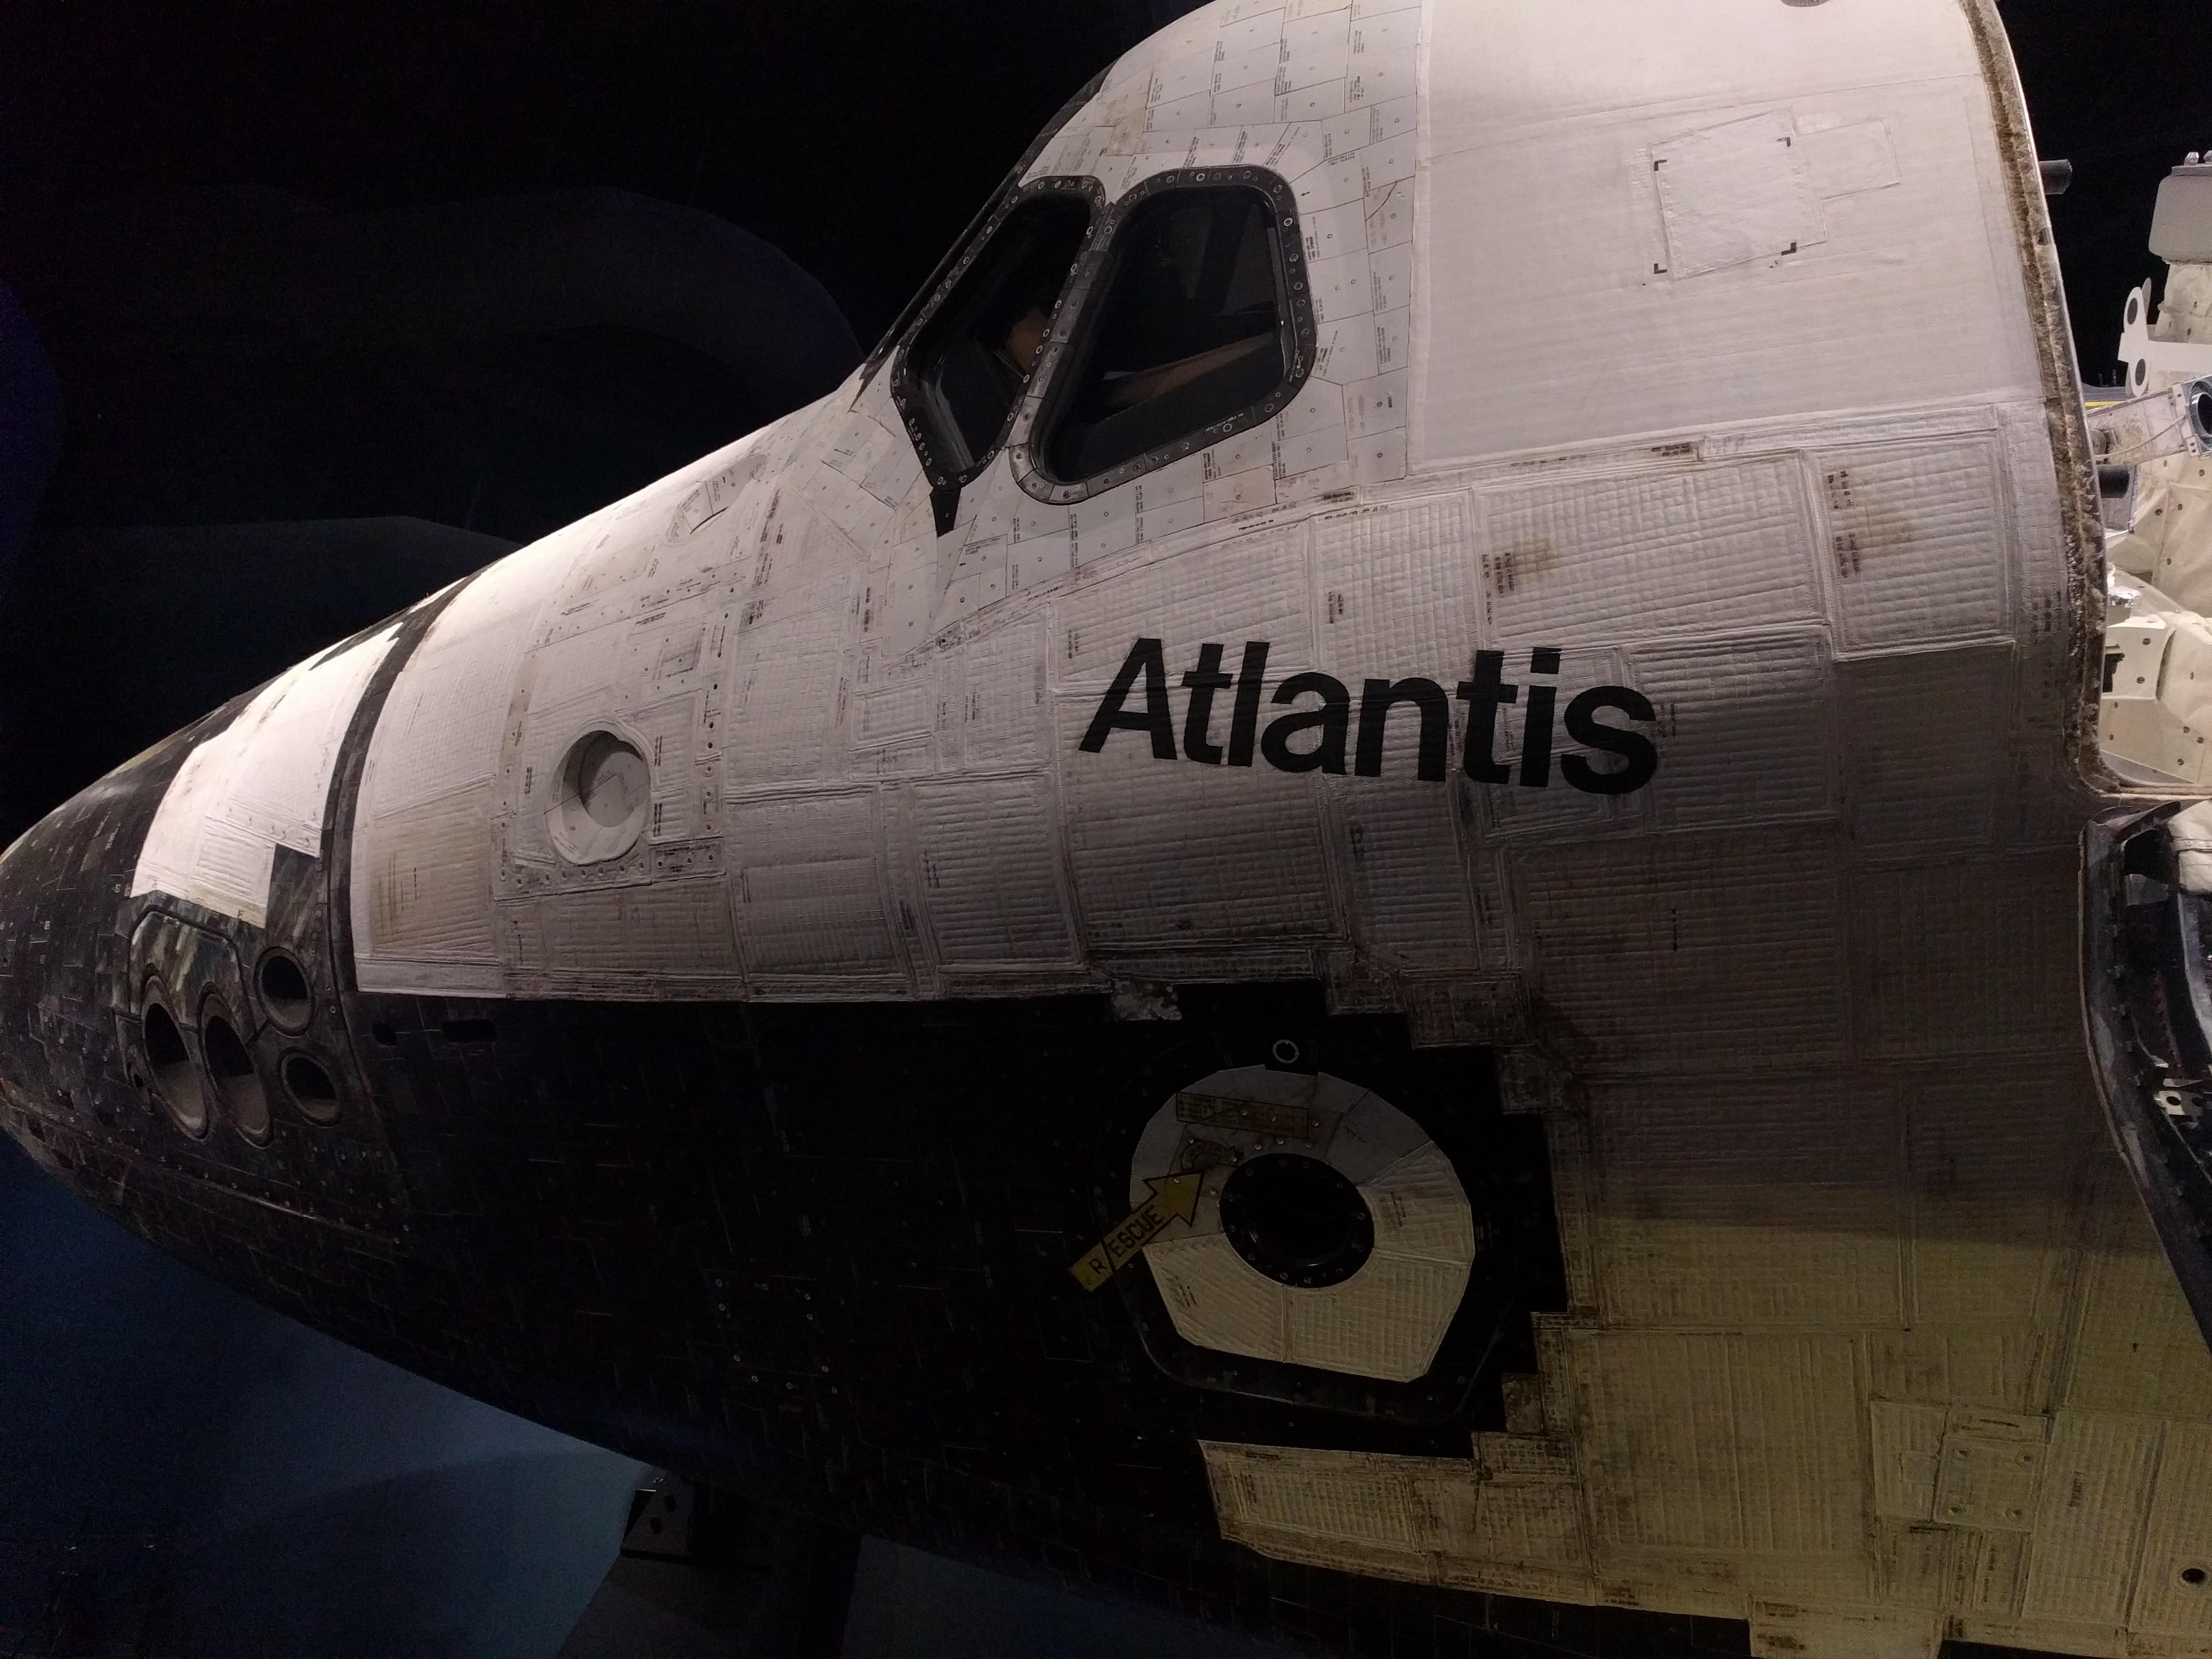 Atlantis Space Ship